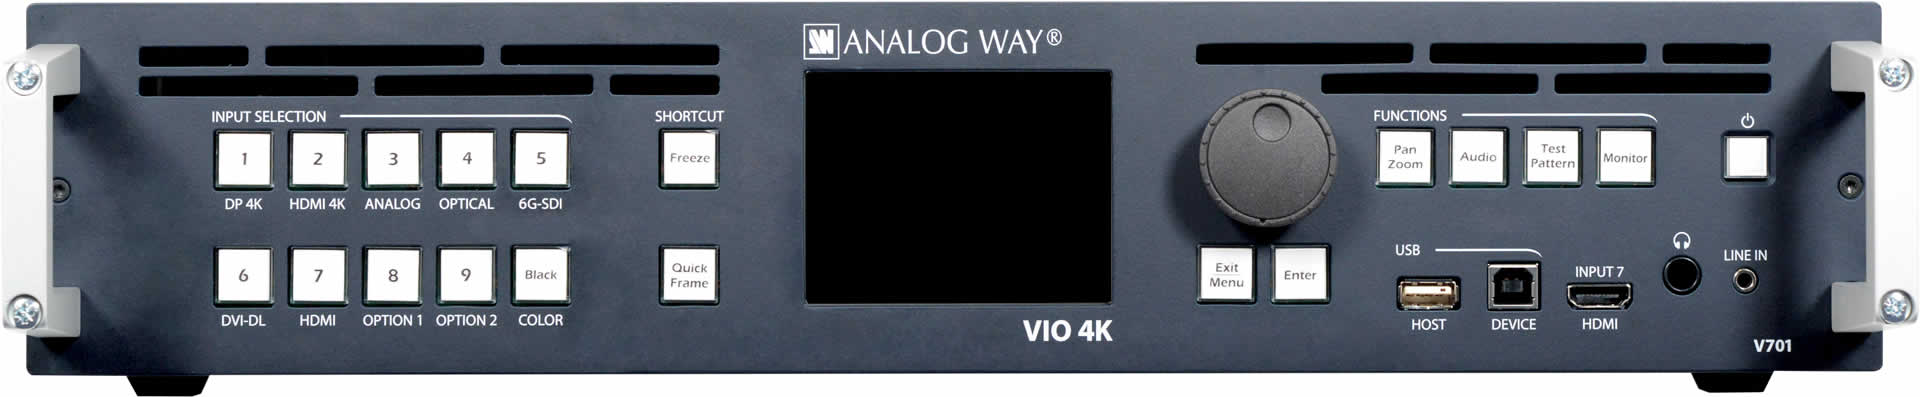 analog-way_vio-4k_01